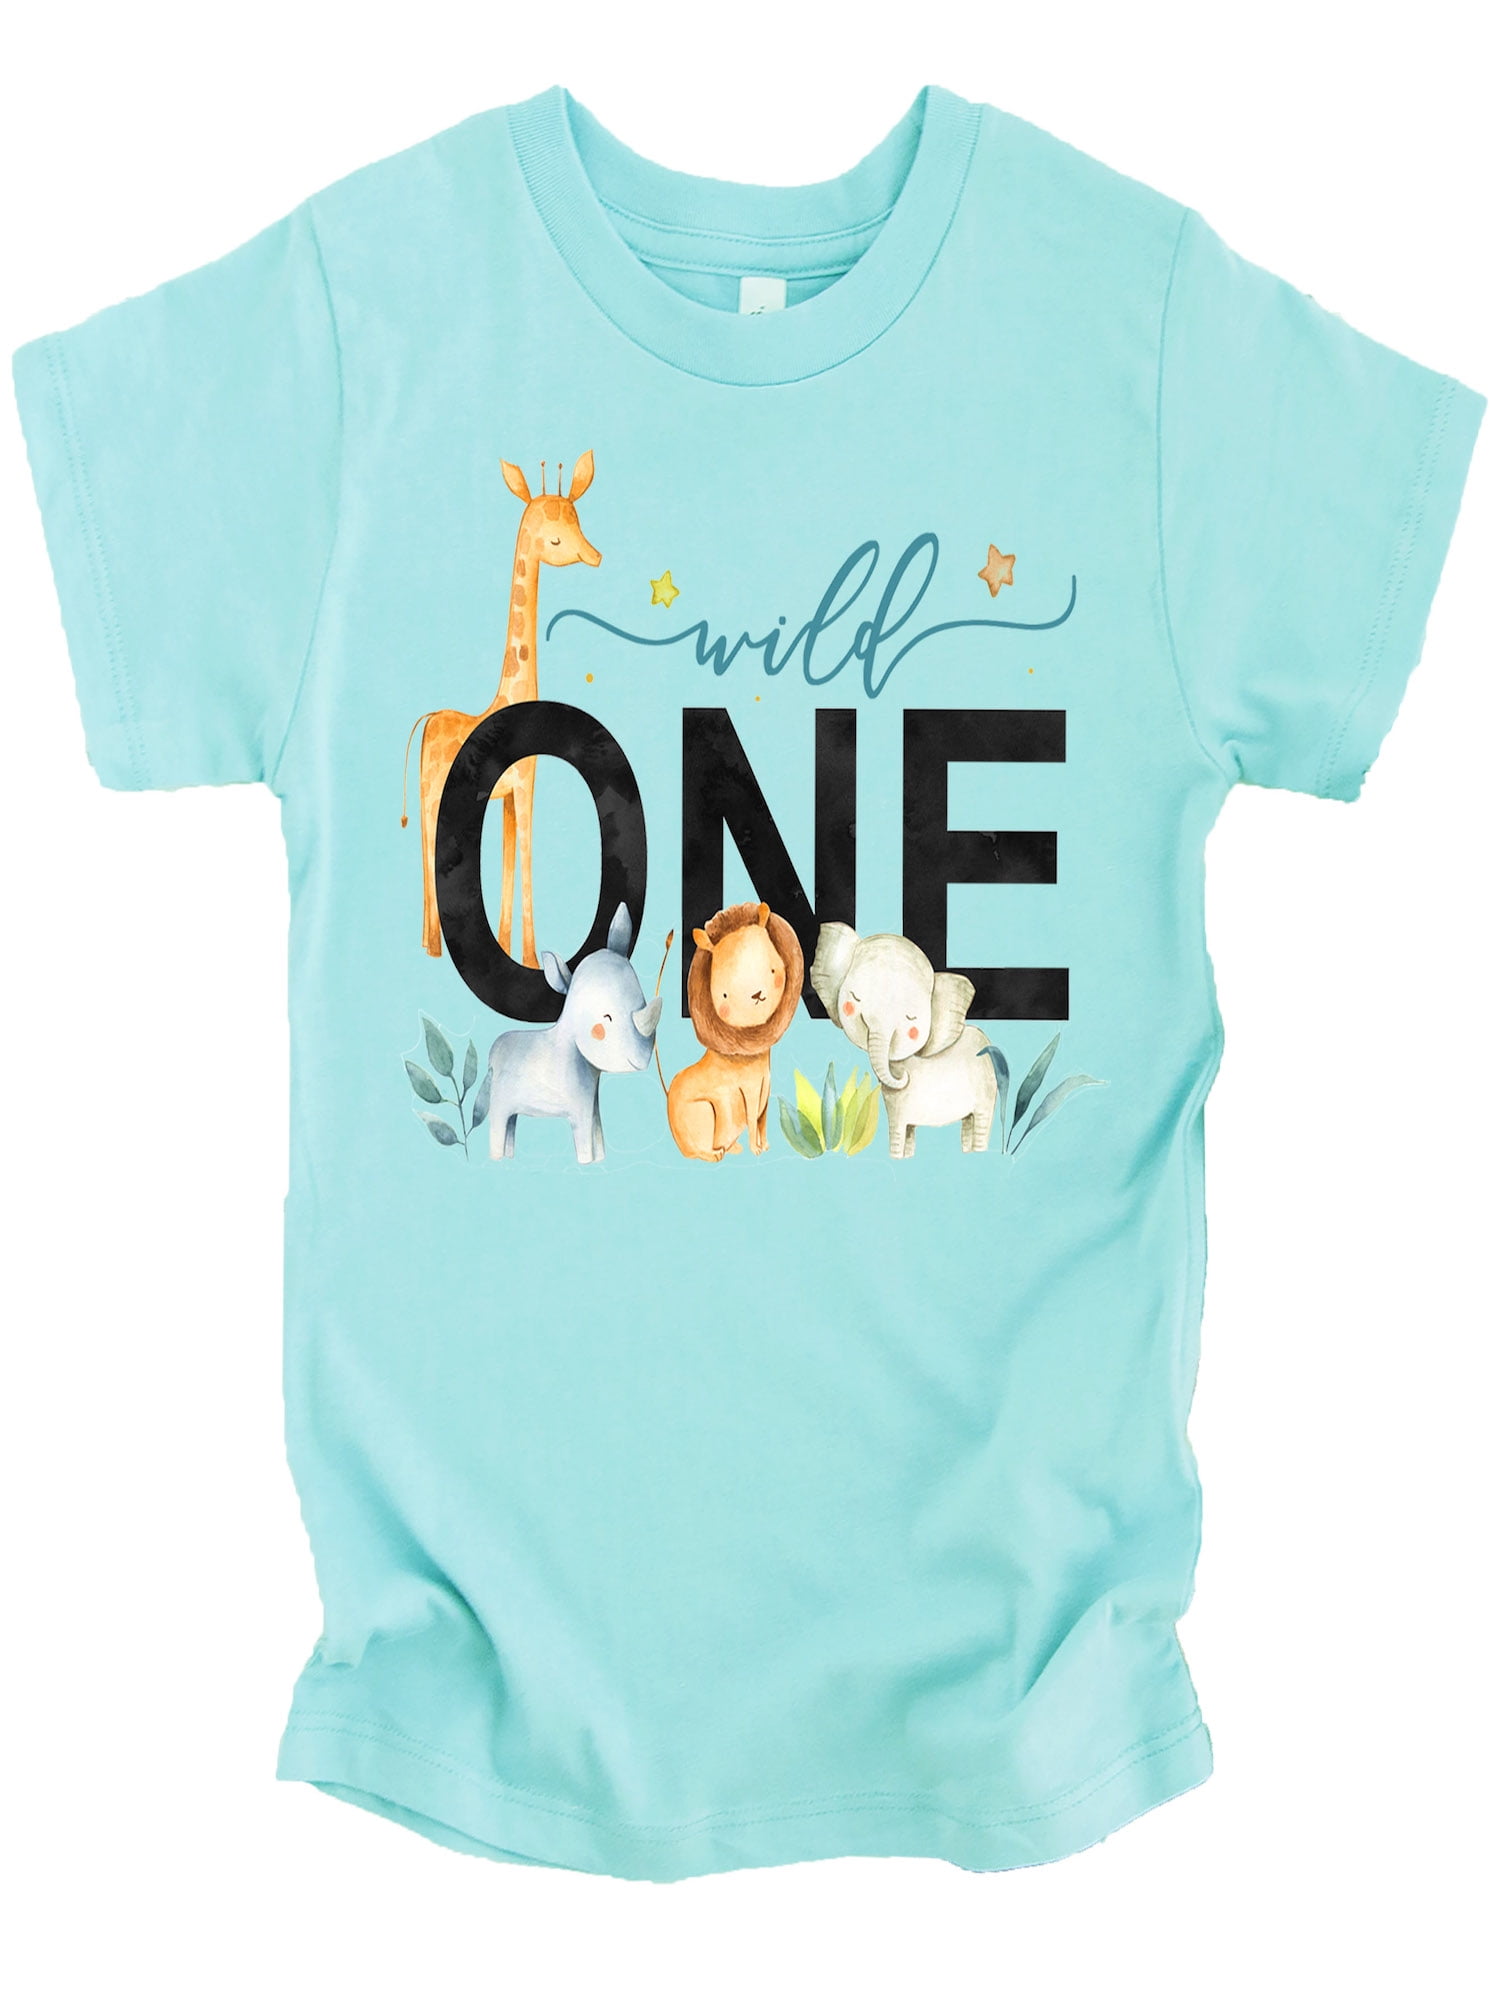 Gå rundt kritiker konstant Wild One Boys 1st Birthday Safari Animal Themed T-Shirts for Baby Boys  Chill Shirt 18 Months - Walmart.com